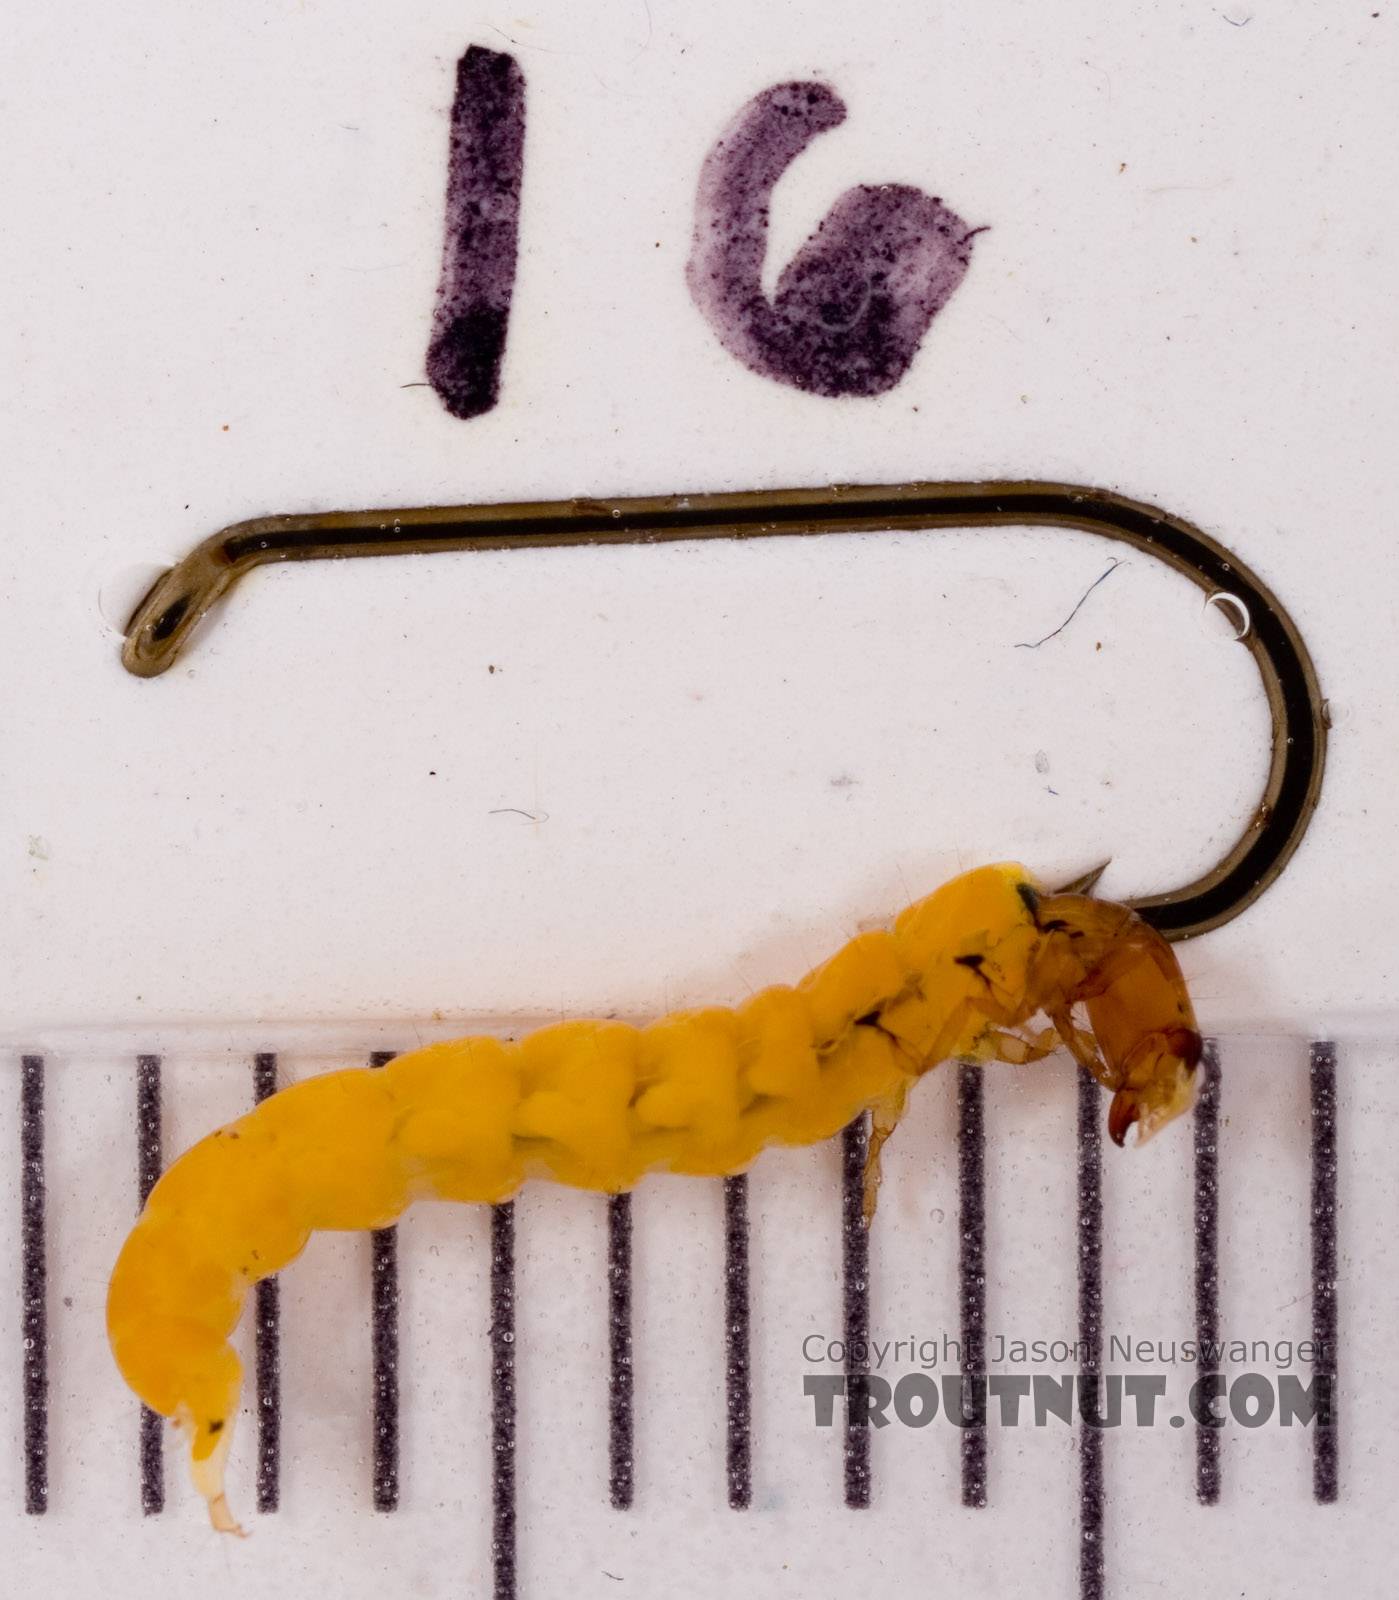 Chimarra (Little Black Sedges) Caddisfly Larva from Fall Creek in New York